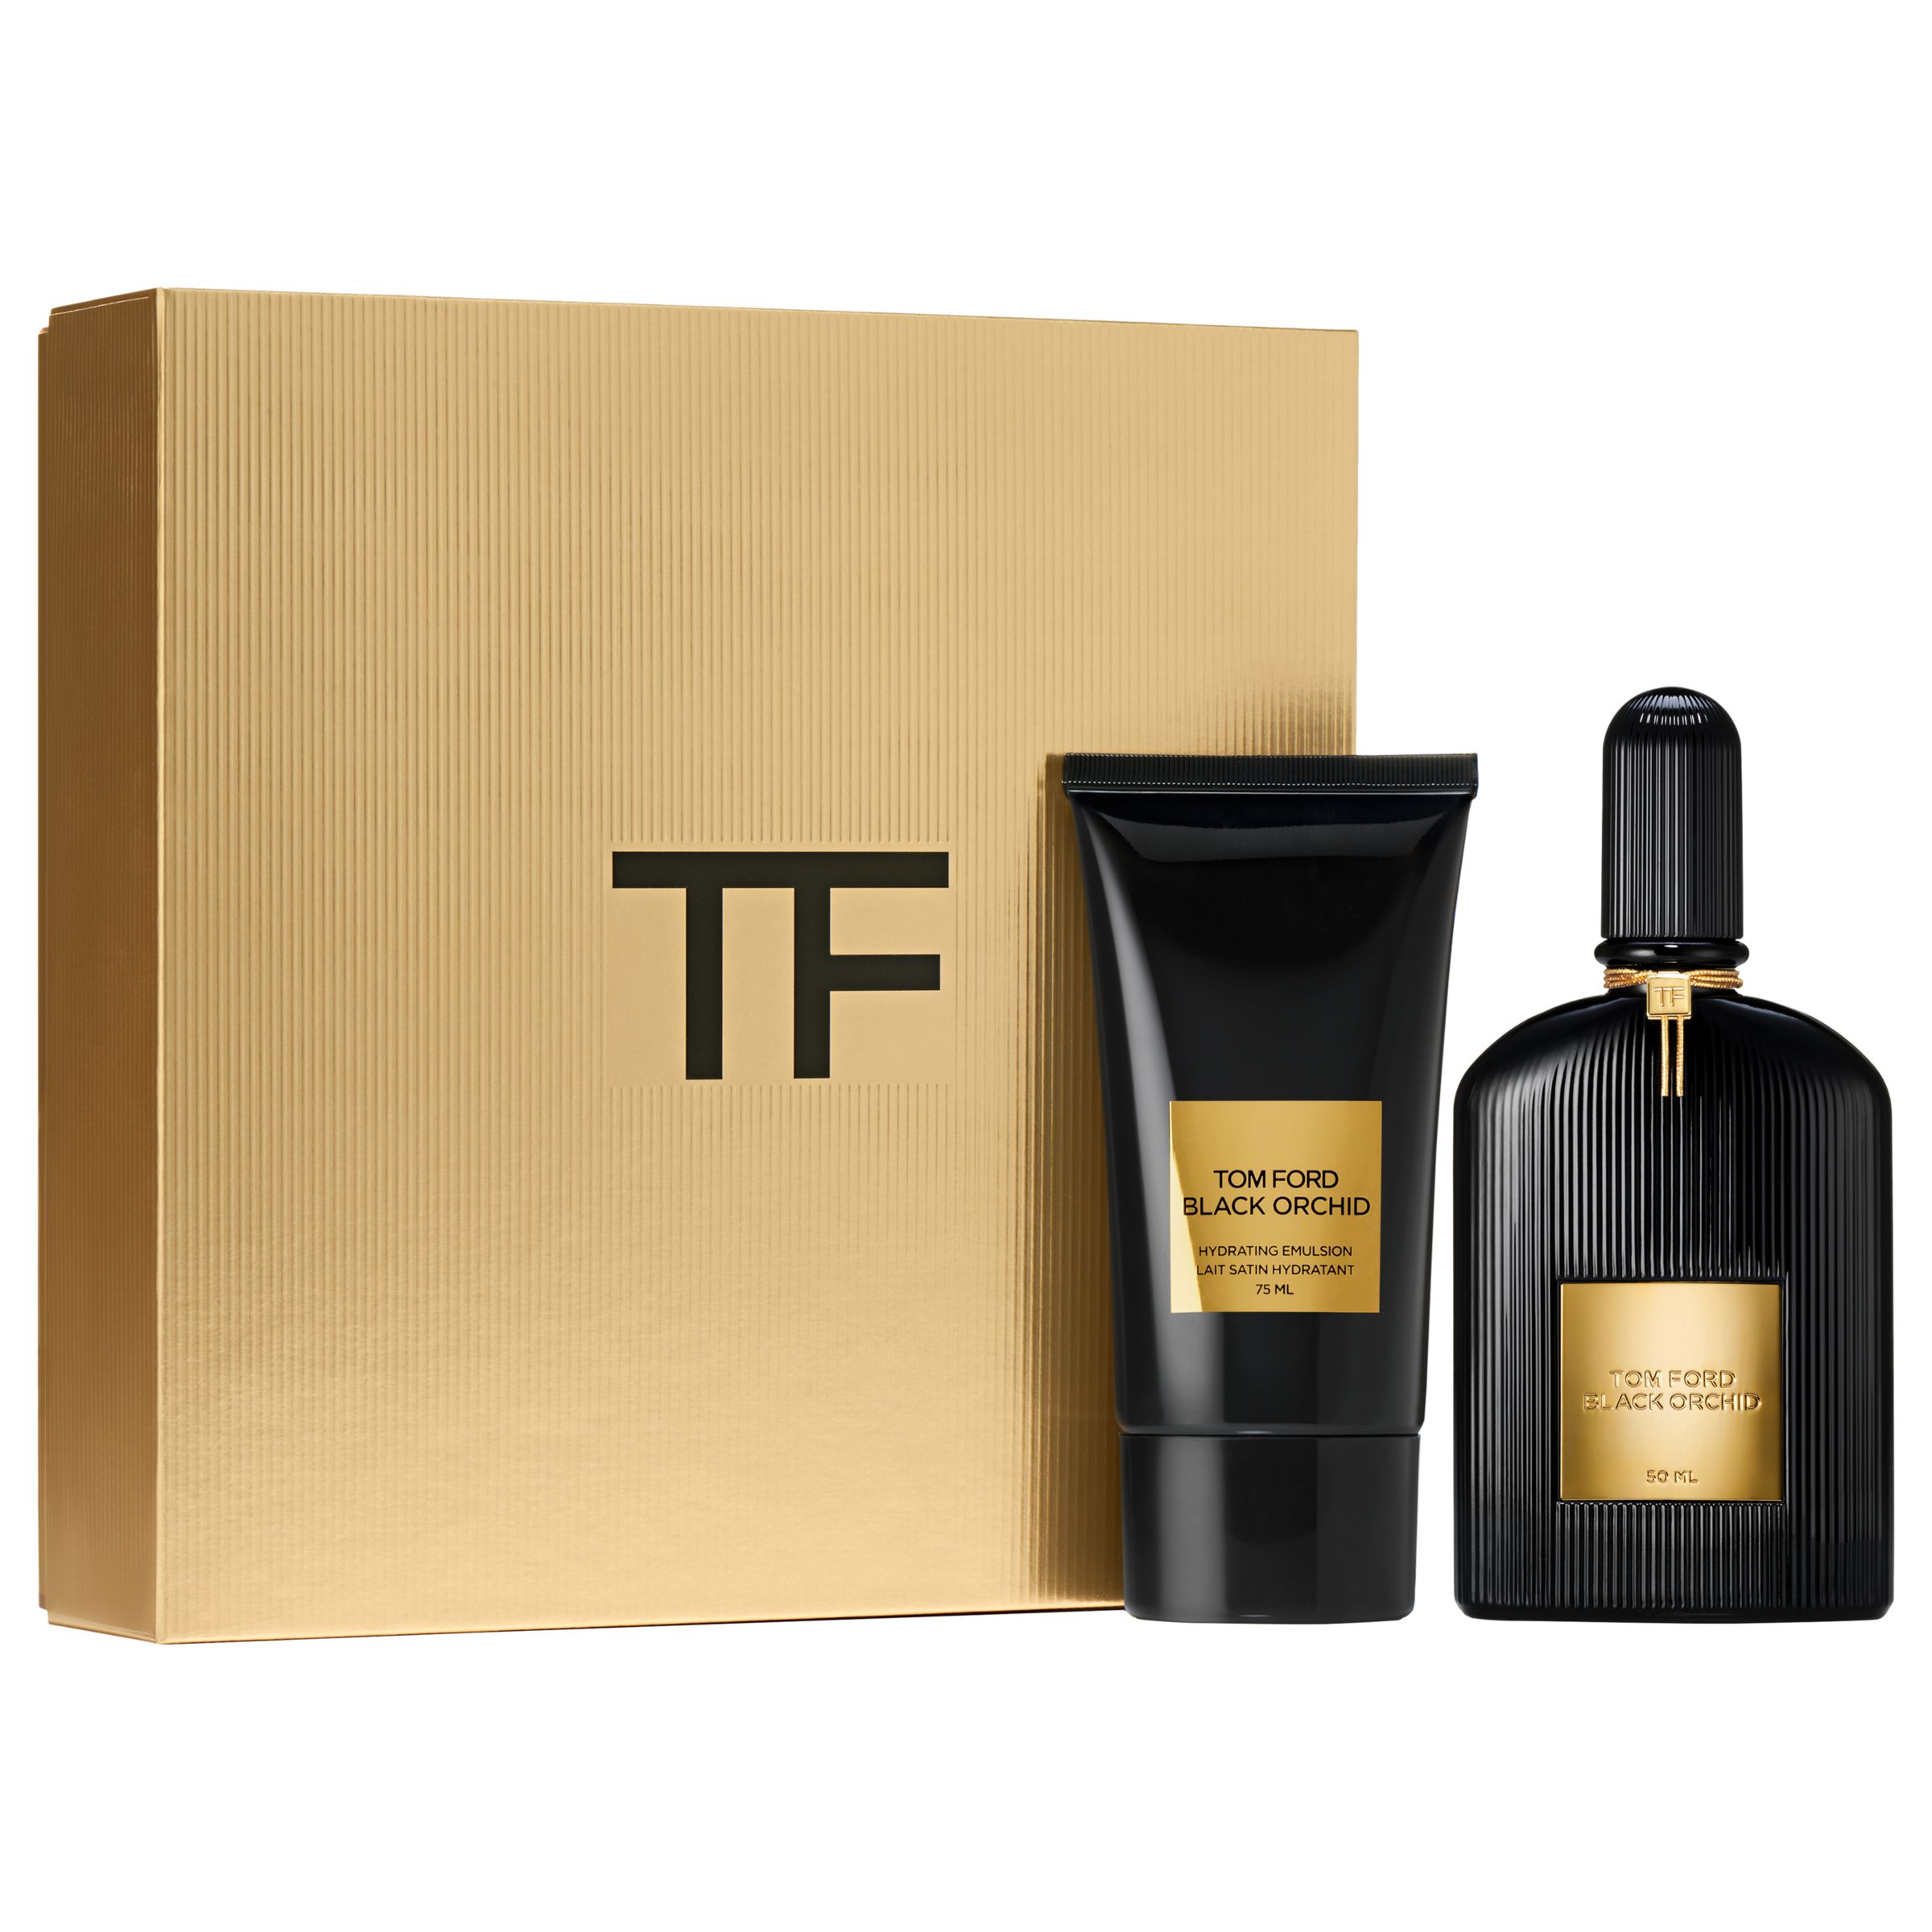 TOM FORD Black Orchid 50ml Eau de Parfum Fragrance Gift Set